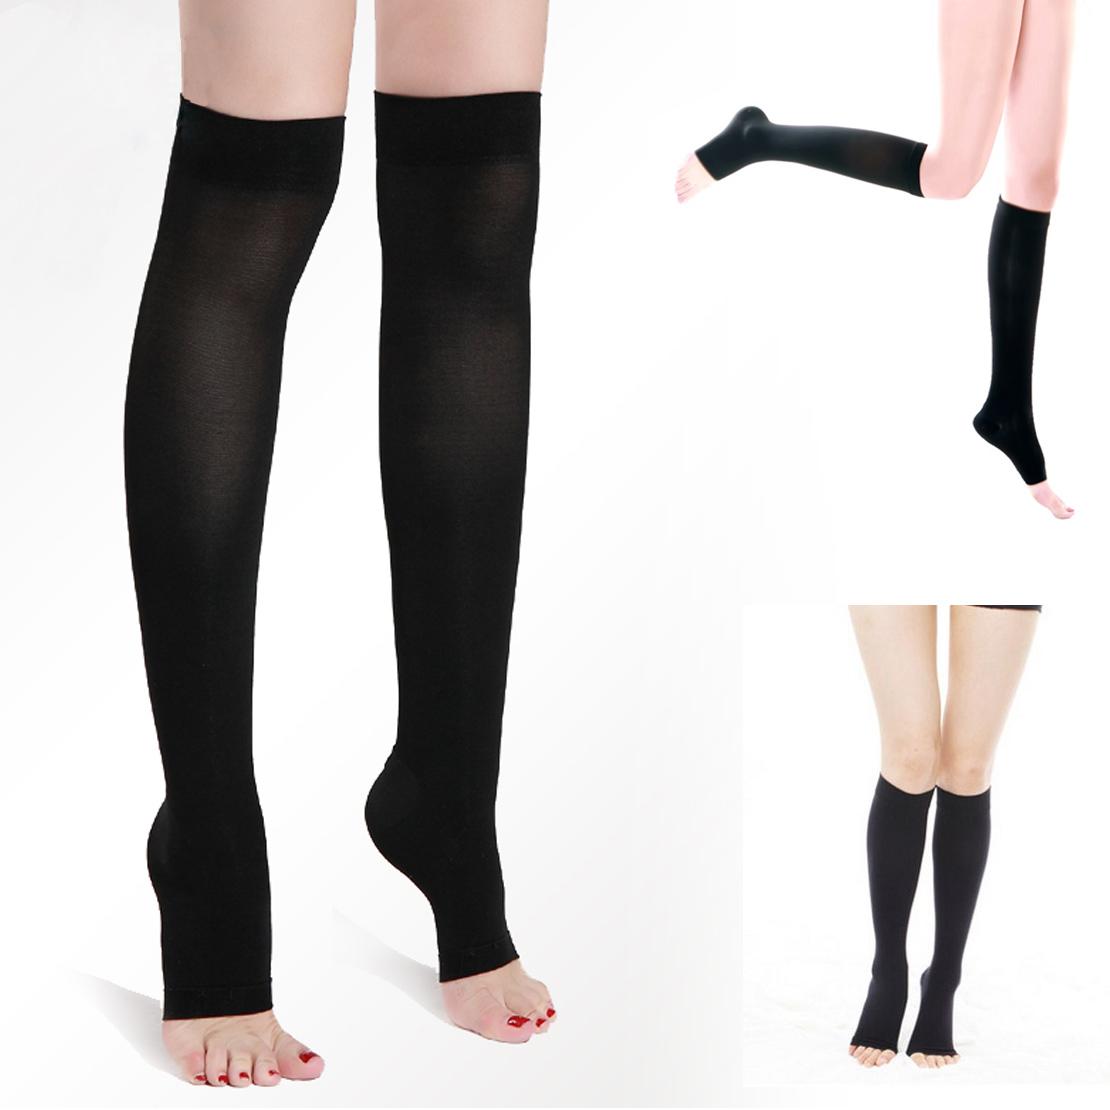 1 Pair New Women Acrylon Knee High Compression Slim Thin Leg 30-40 mmhg Supports Open Toe Varicose Veins Shaping Stockings